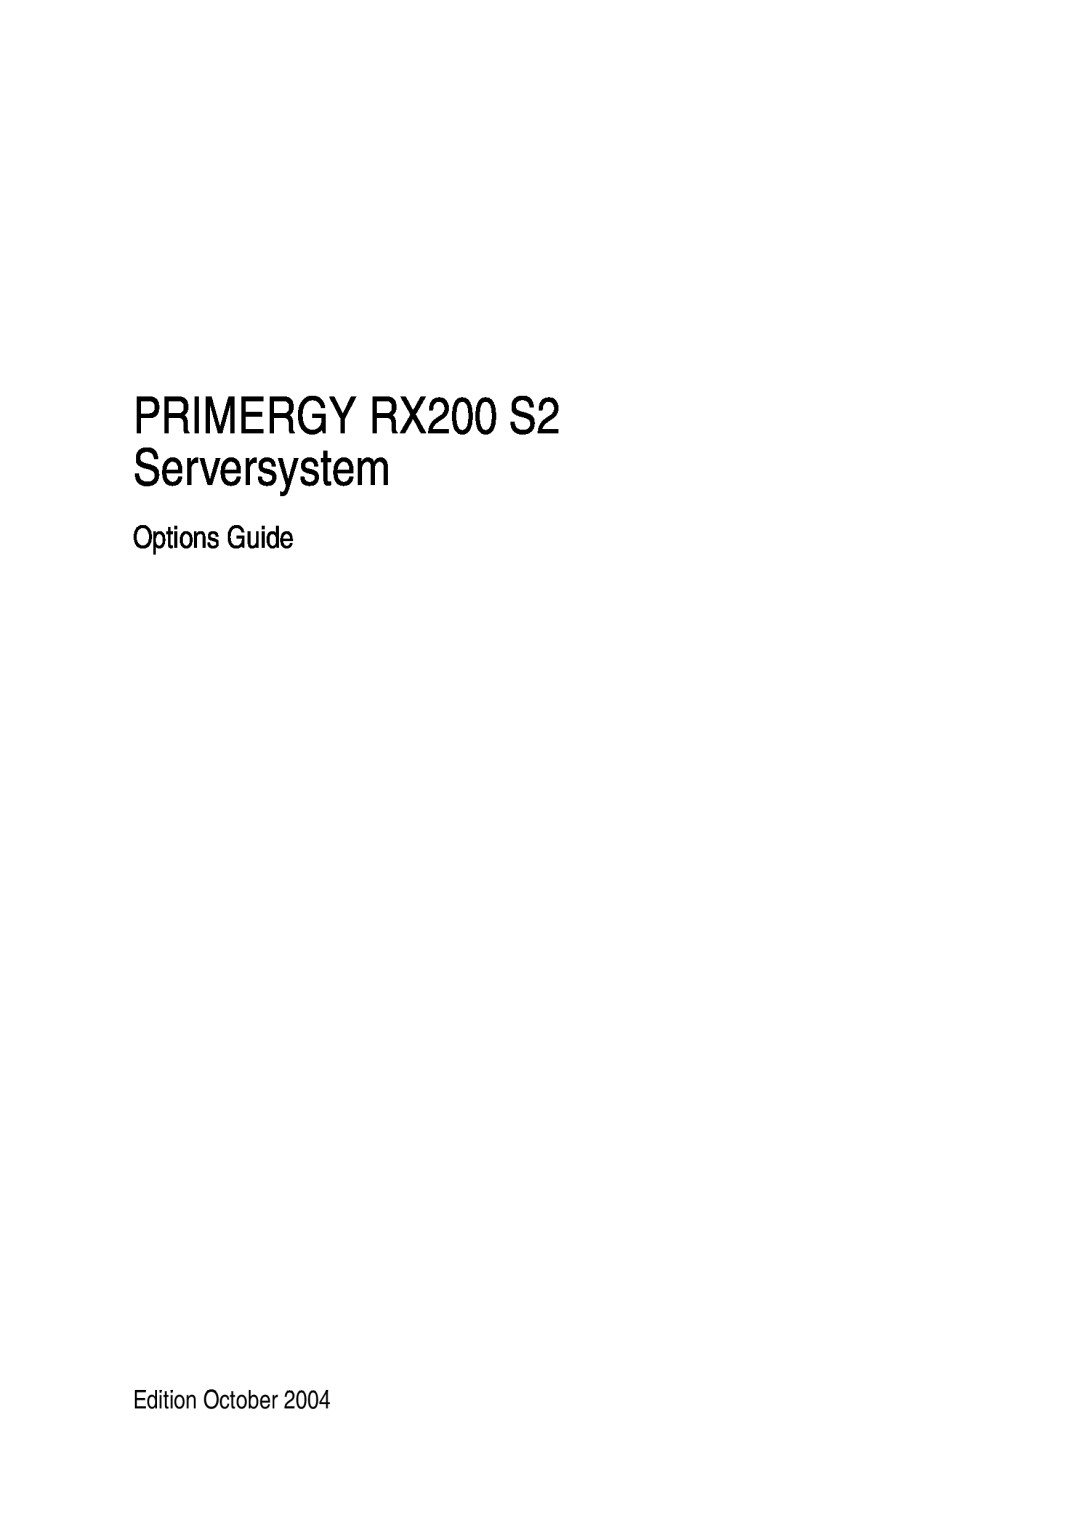 Fujitsu manual PRIMERGY RX200 S2 Serversystem, Options Guide 